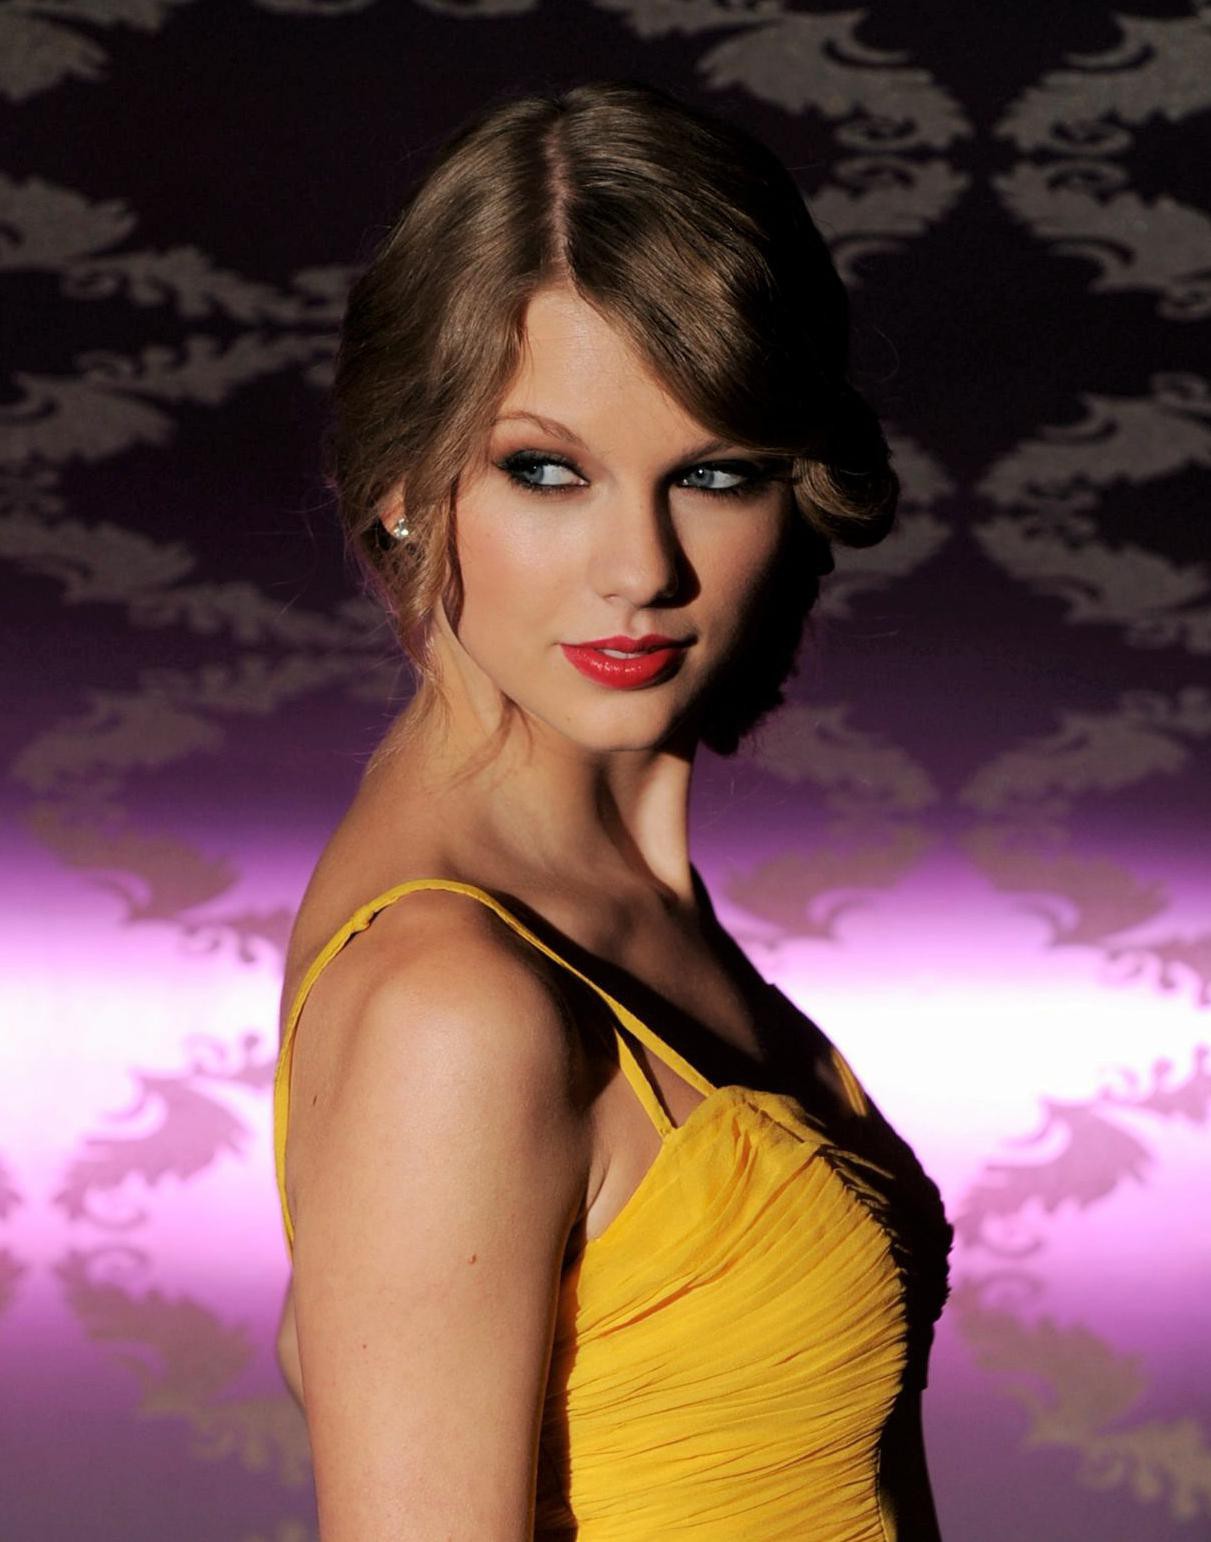 dorado | Estilo Taylor Swift: moda de celebridades,  celebridades más calientes,  lindas fotos de celebridades,  Taylor Swift,  traje de taylor swift,  caliente taylor swift,  estilovore,  Dorado  